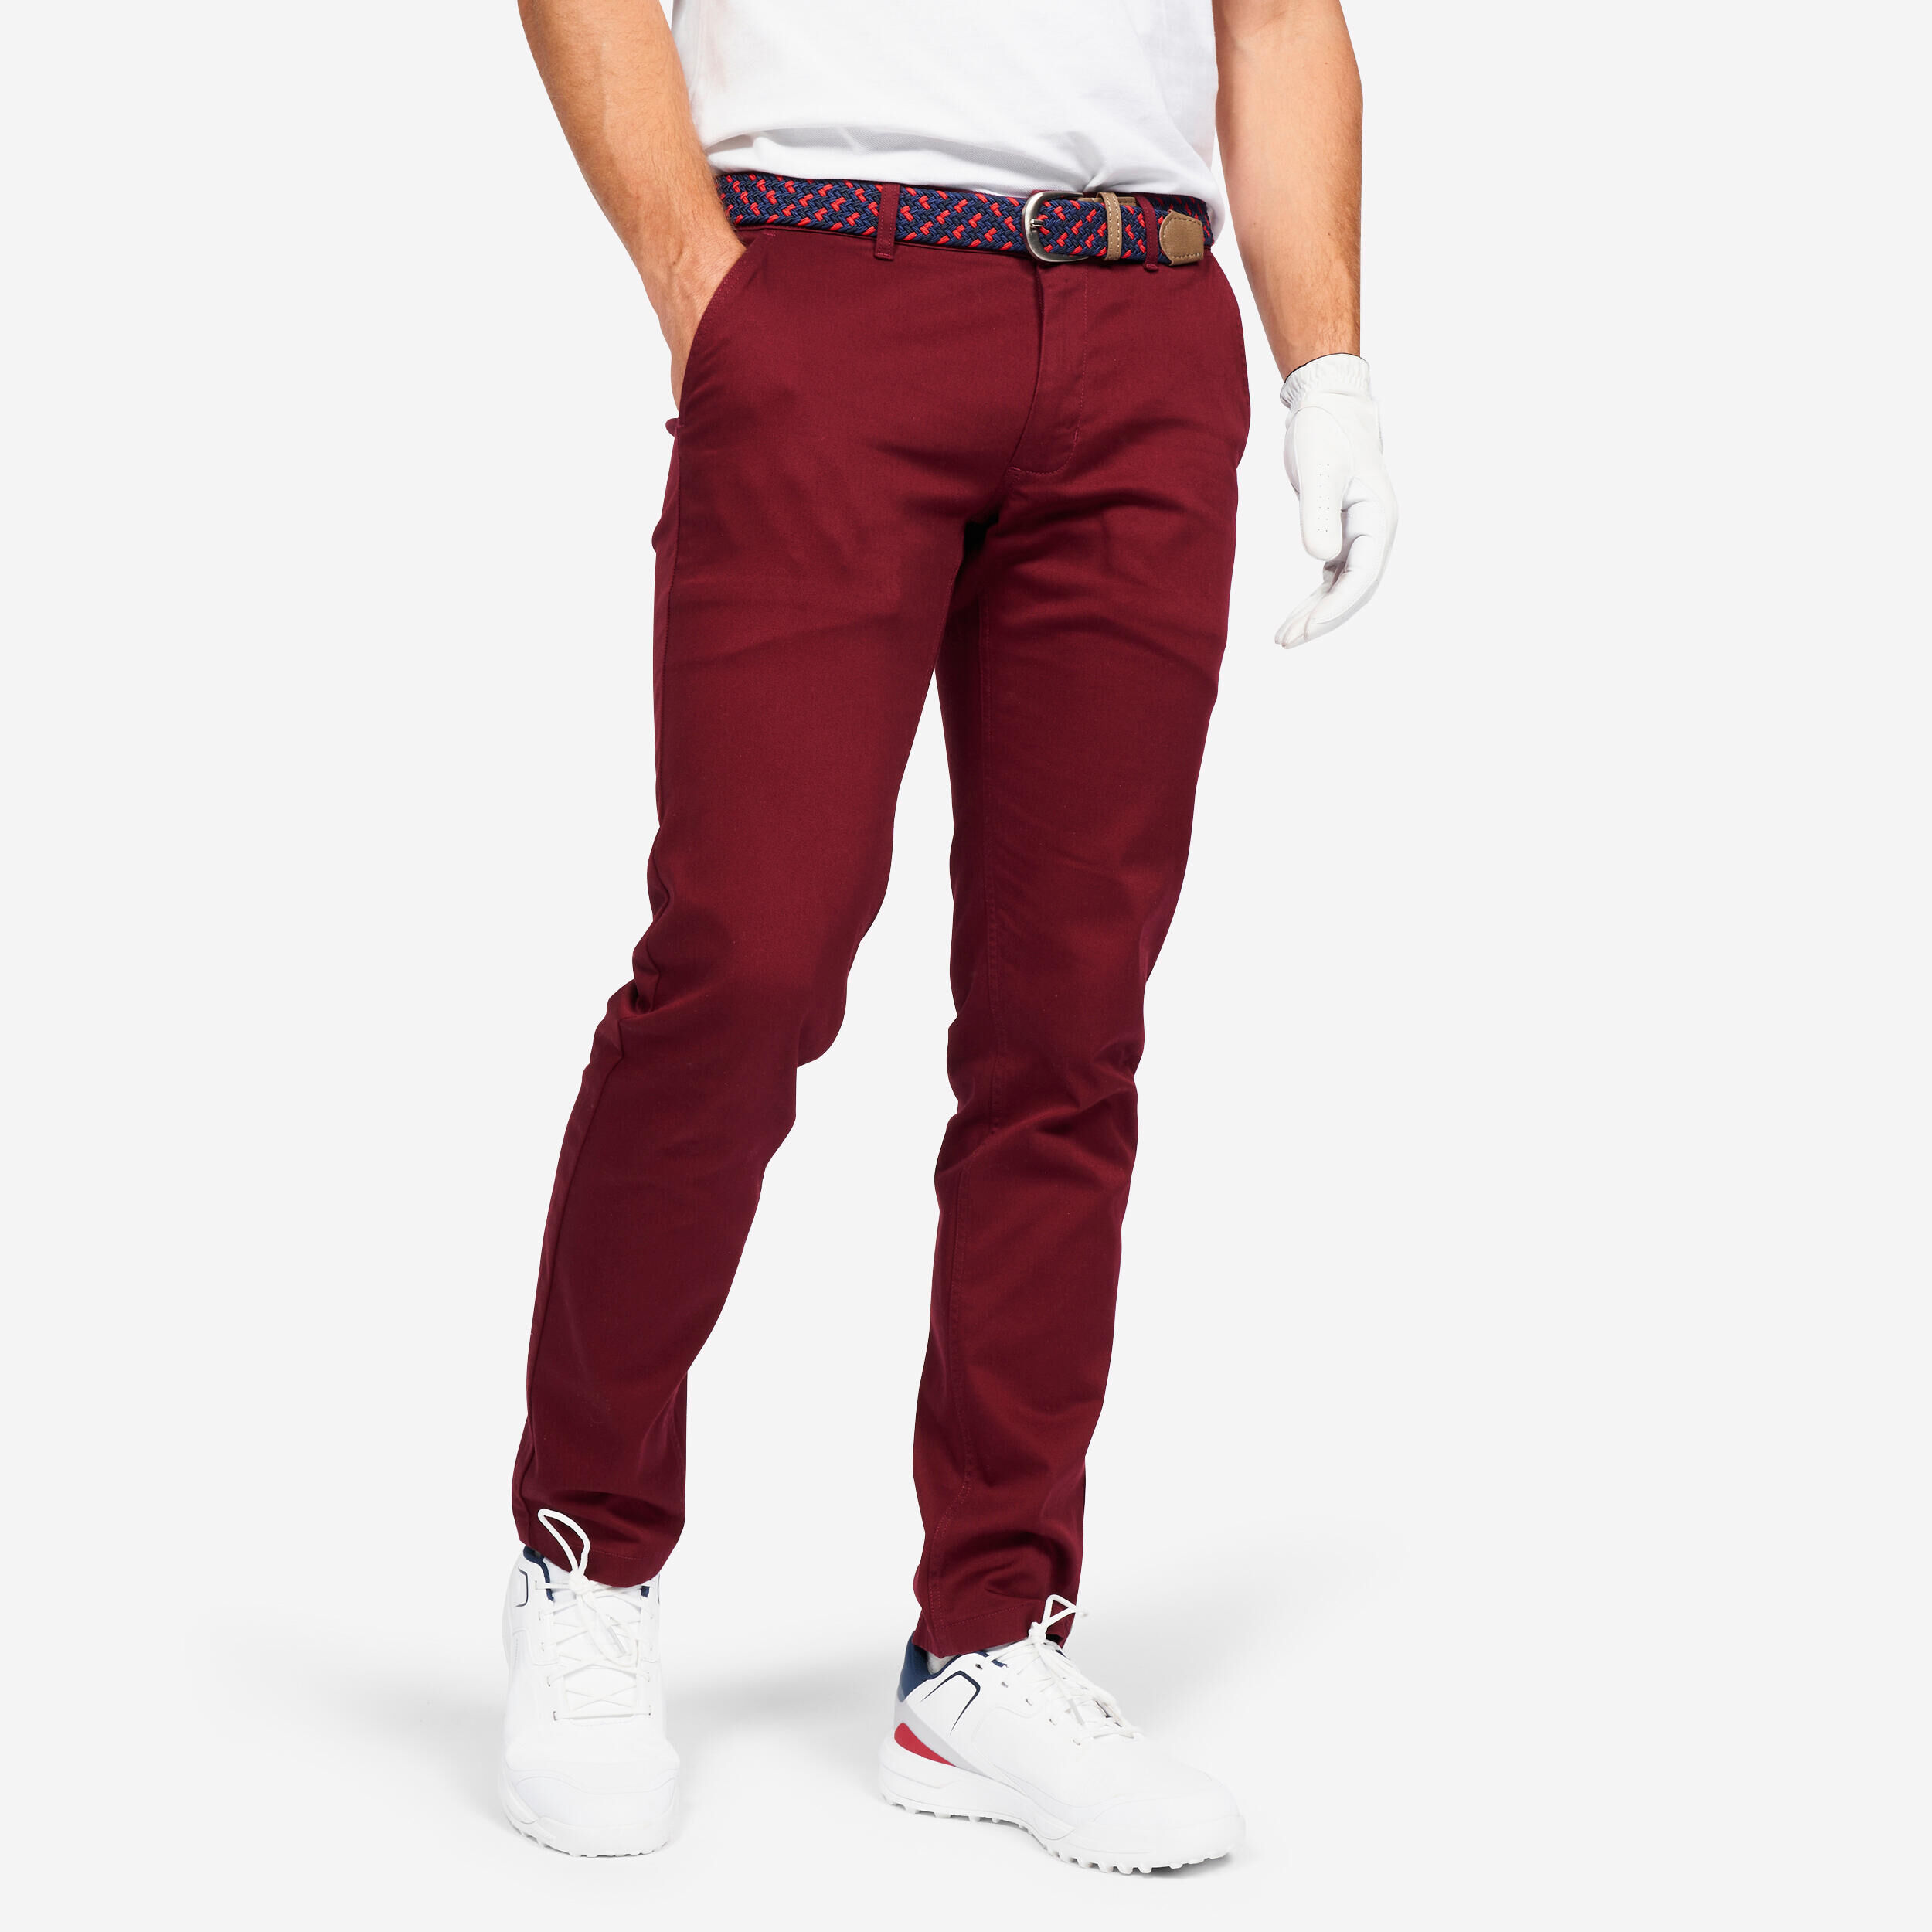 INESIS Men's golf trousers - MW500 dark red